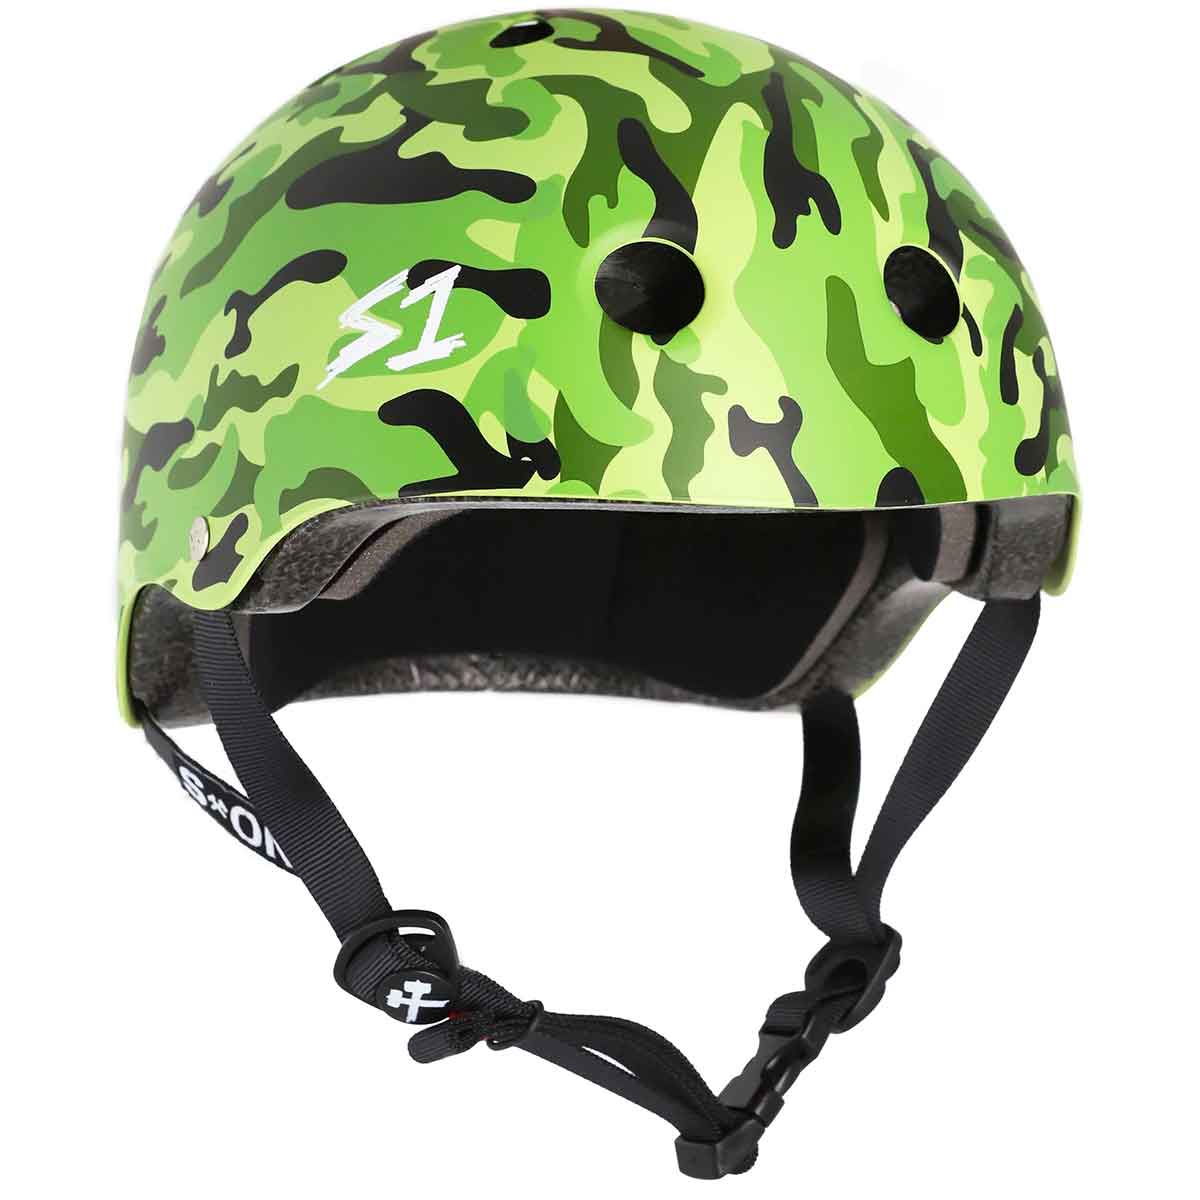 S1 Lifer Skateboard Helmet - Matte Green Camo | SoCal Skateshop